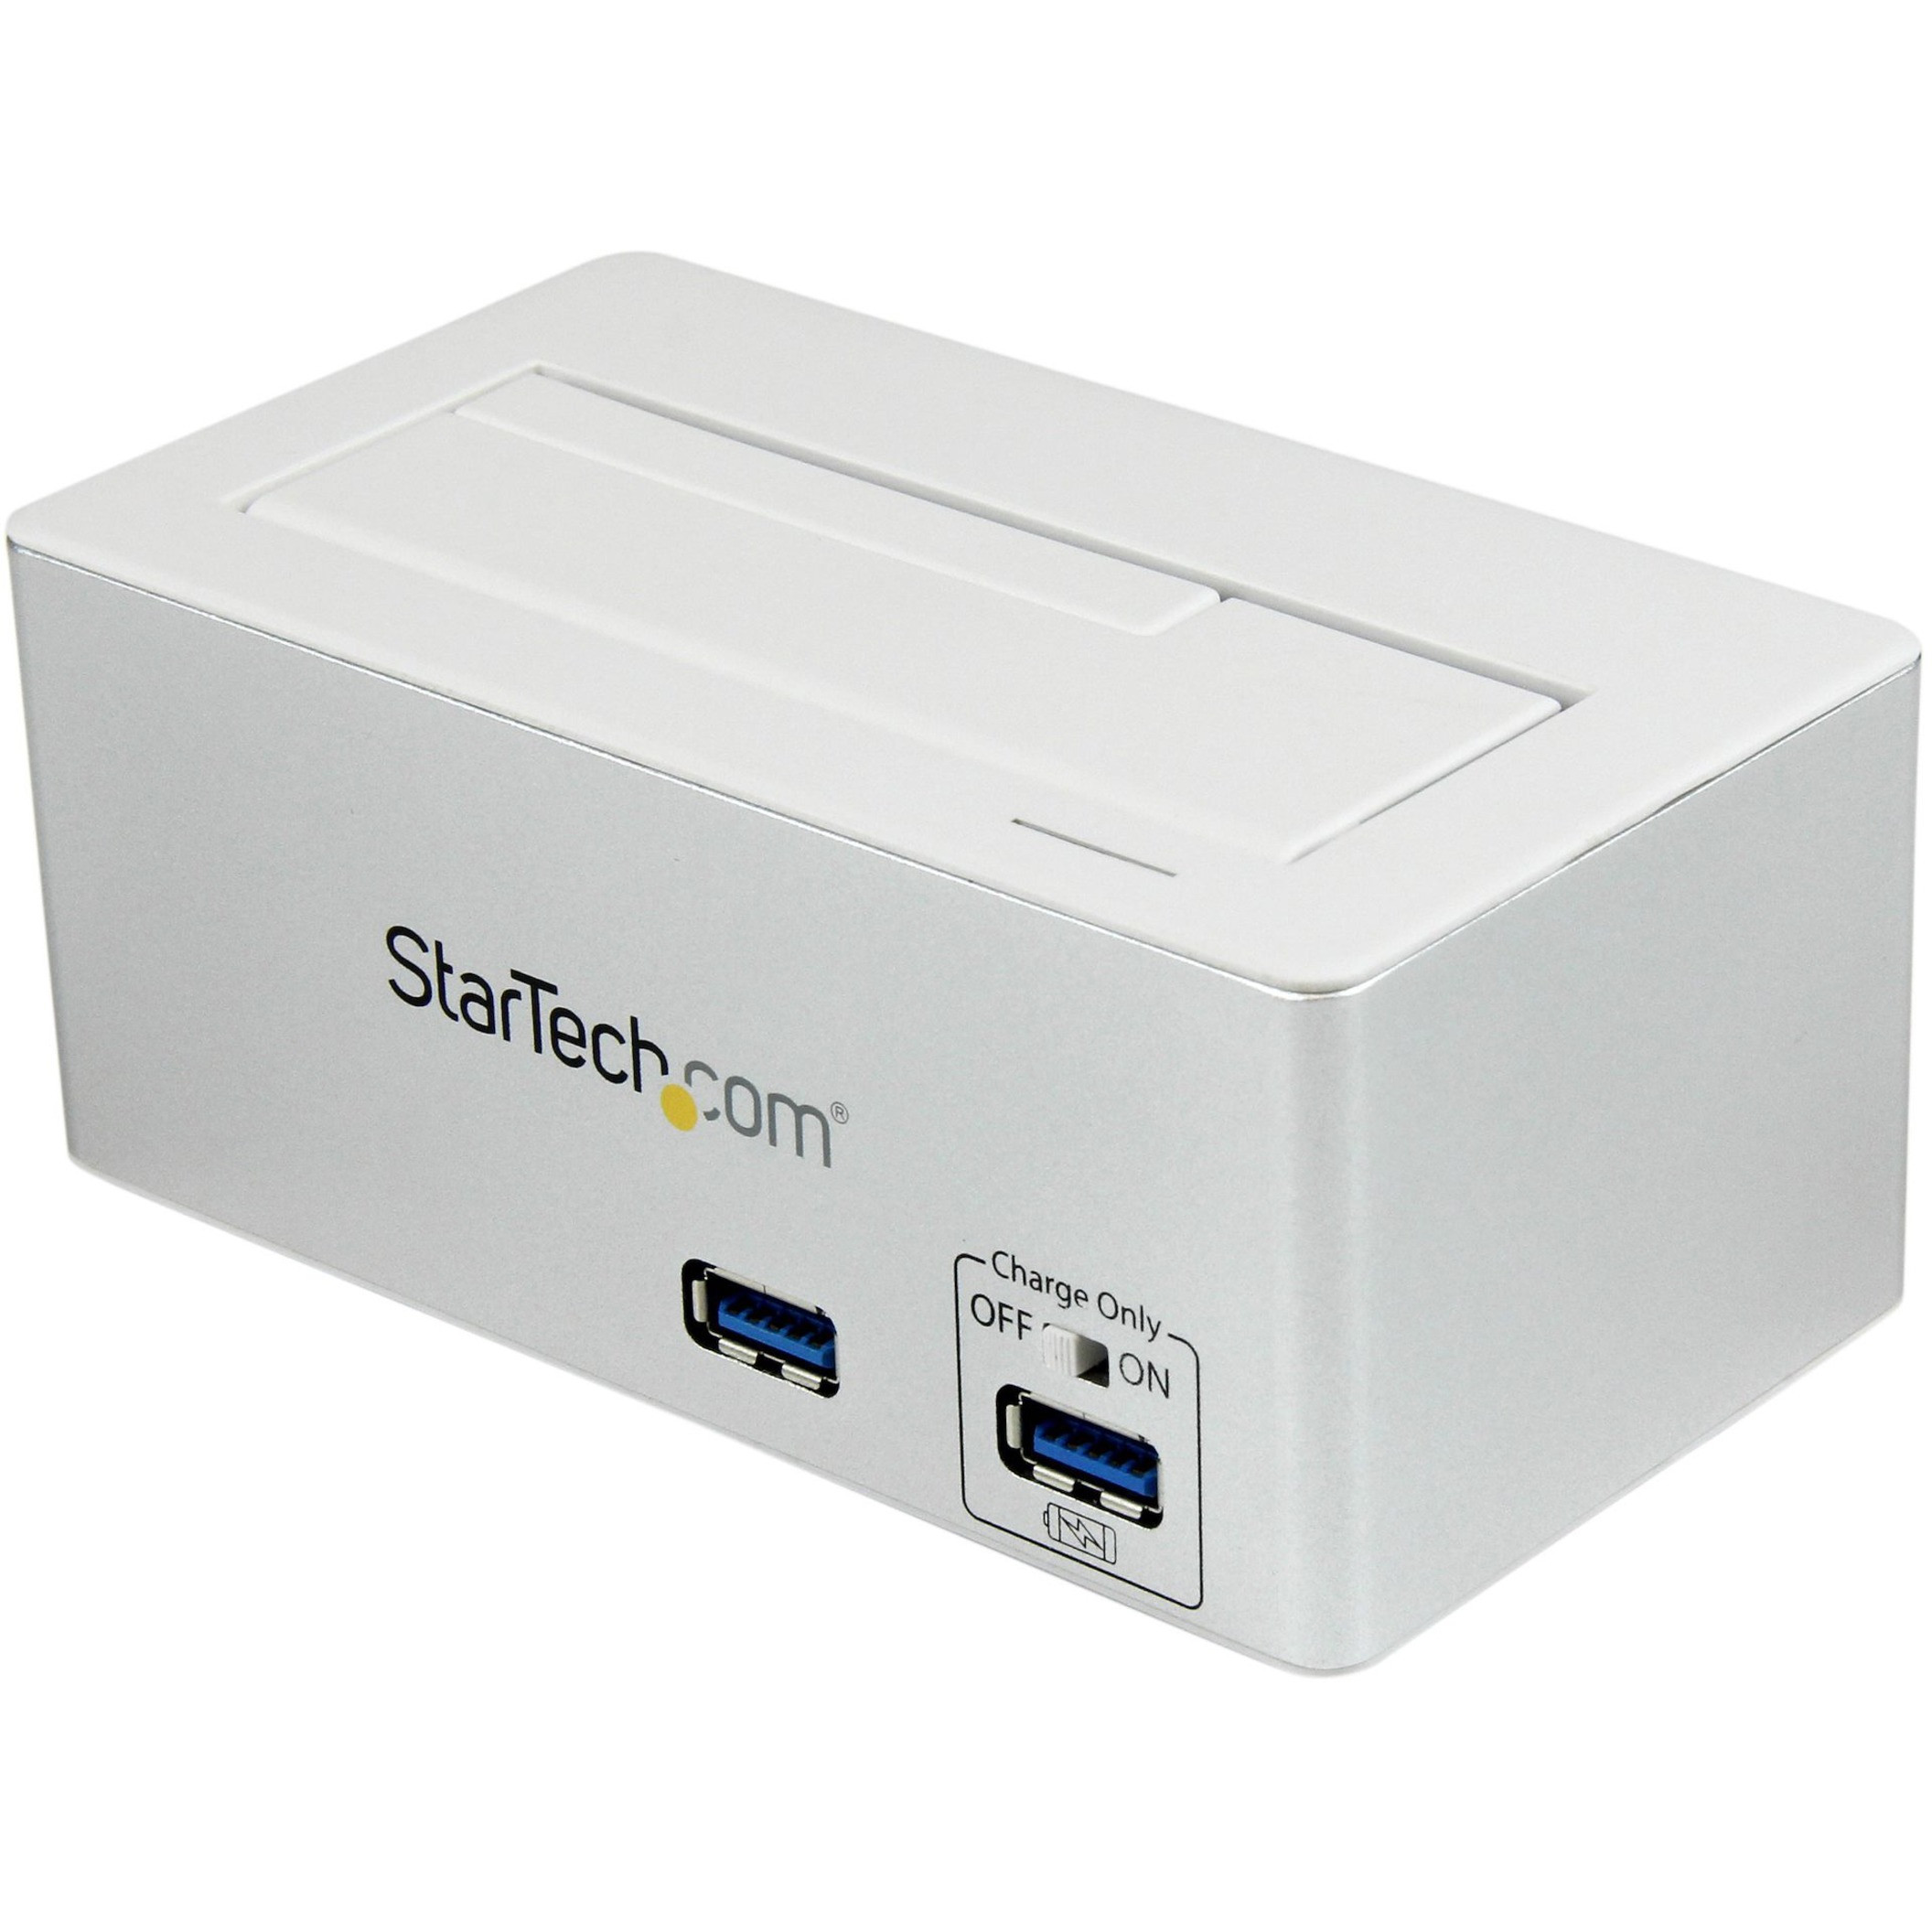 Startech .com USB 3.0 SATA Hard Drive Docking Station SSD / HDD with integrated Fast Charge USB Hub and UASP For SATA 6 yo... SDOCKU33HW - Corporate Armor